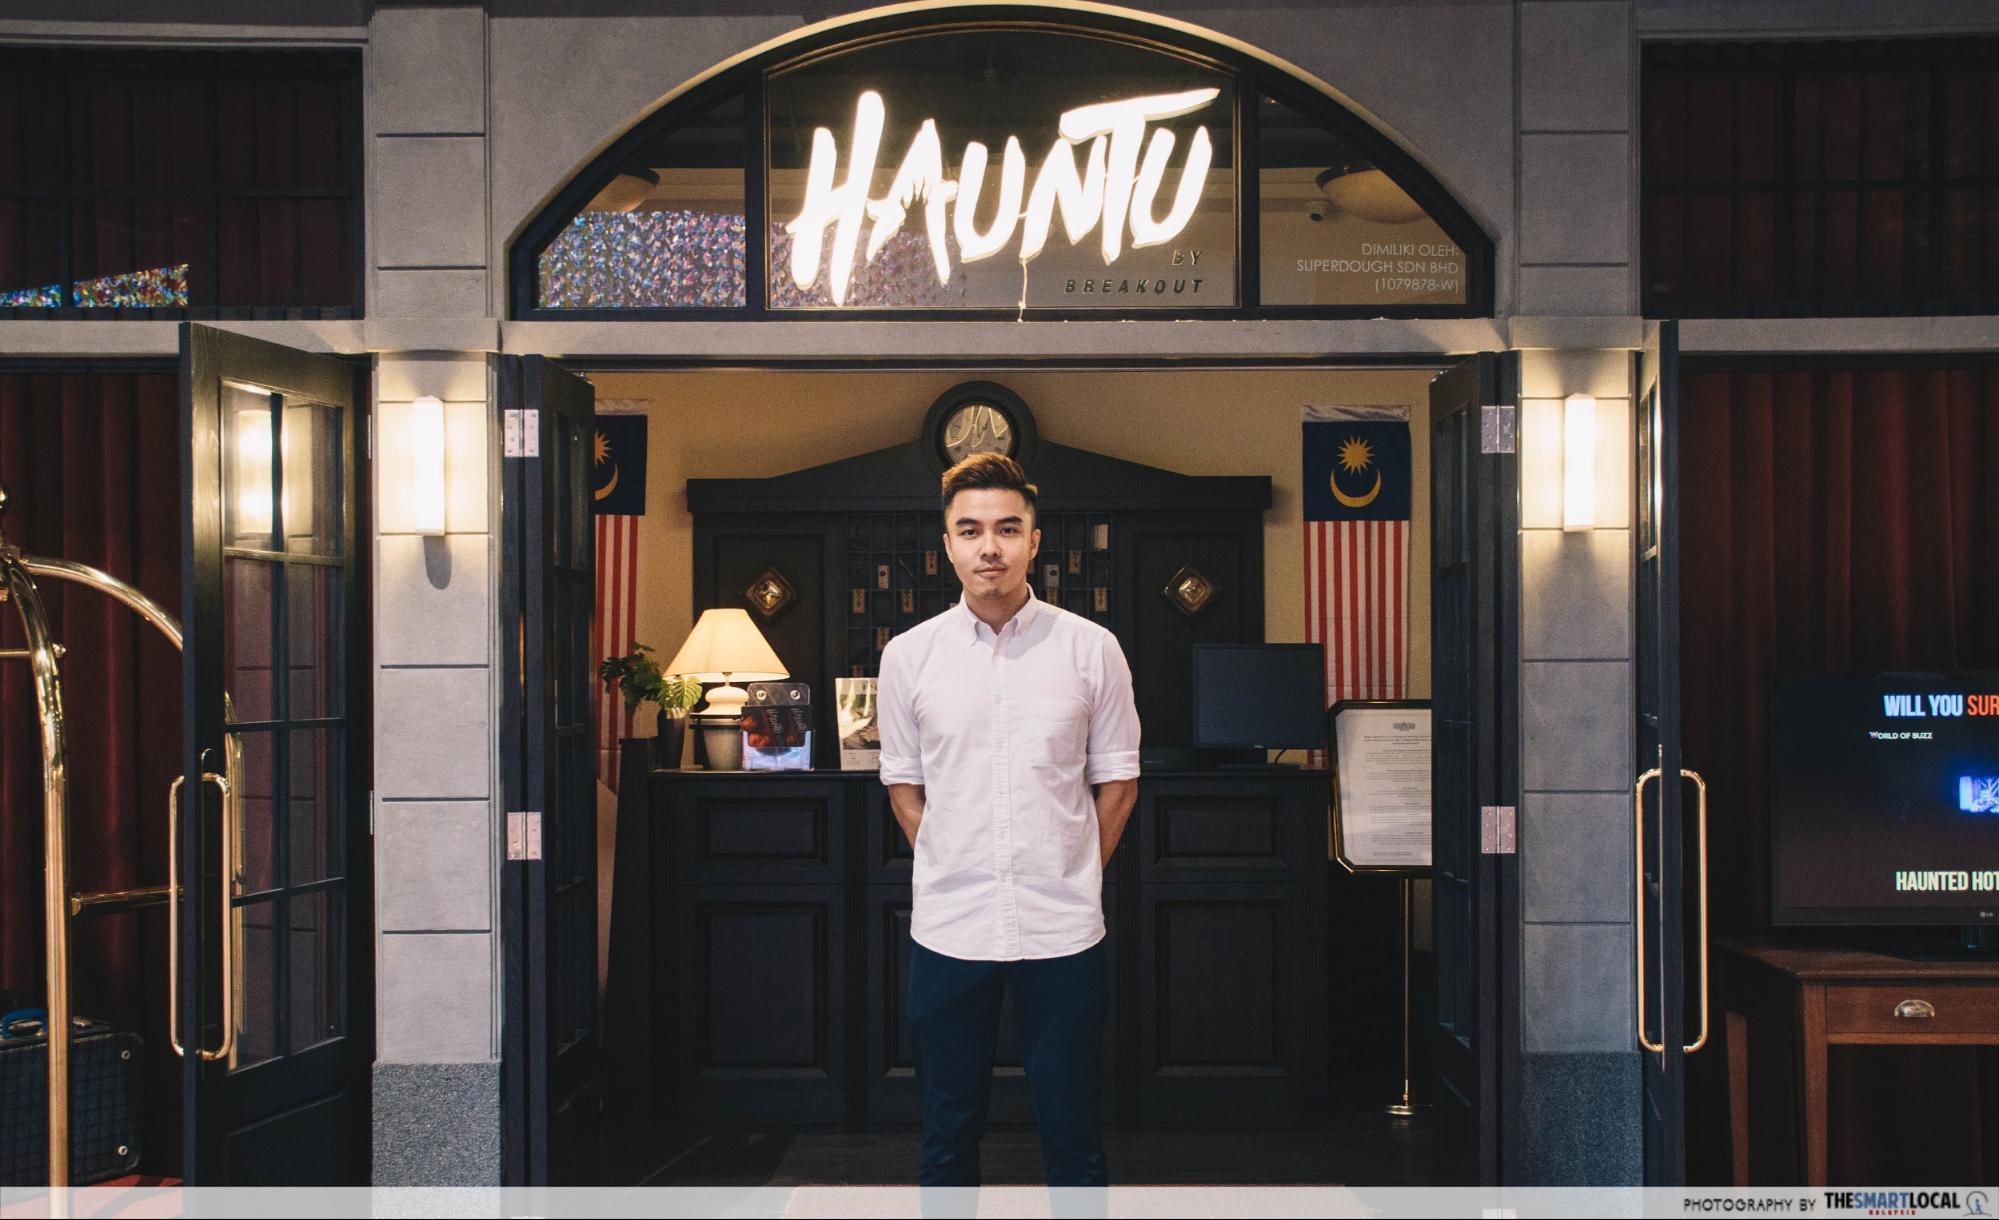 Hauntu is a haunted house in Malaysia - Hauntu co-founder